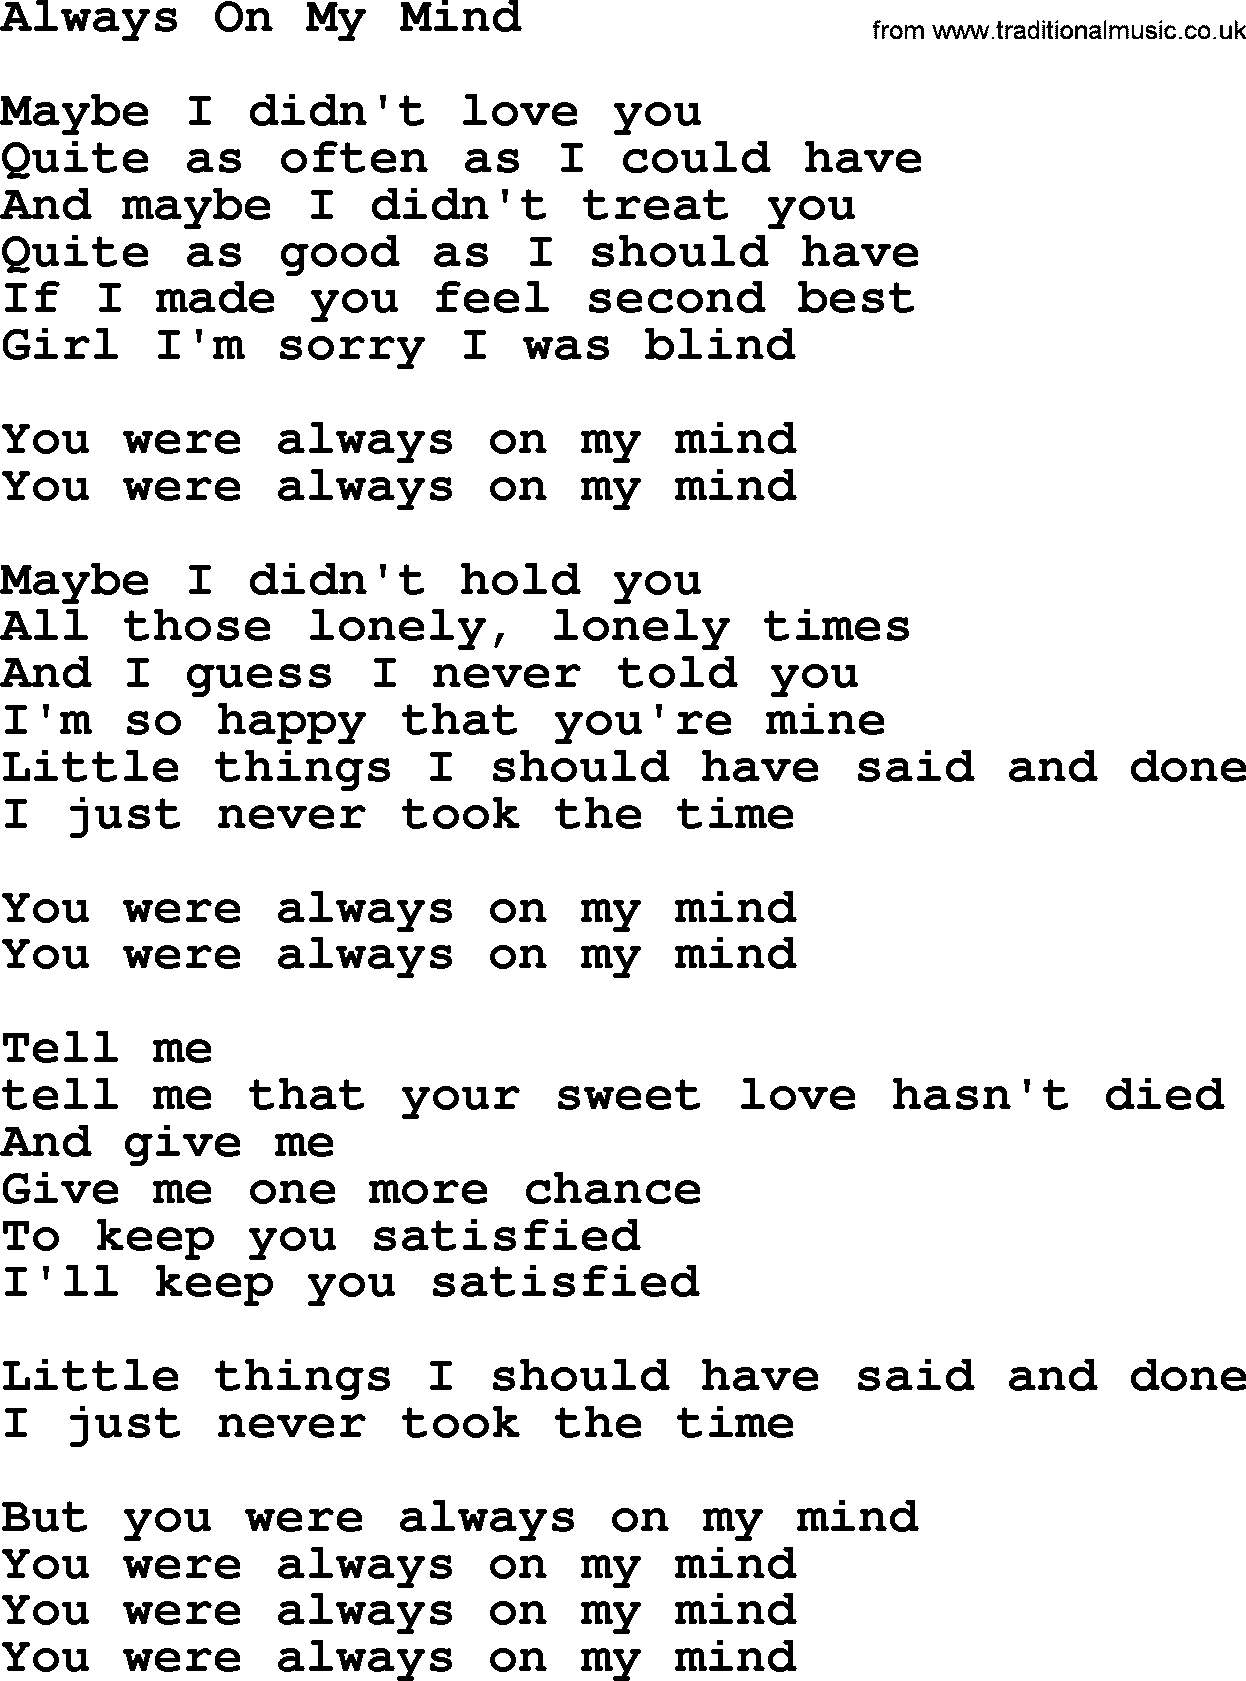 Willie Nelson song: Always On My Mind lyrics